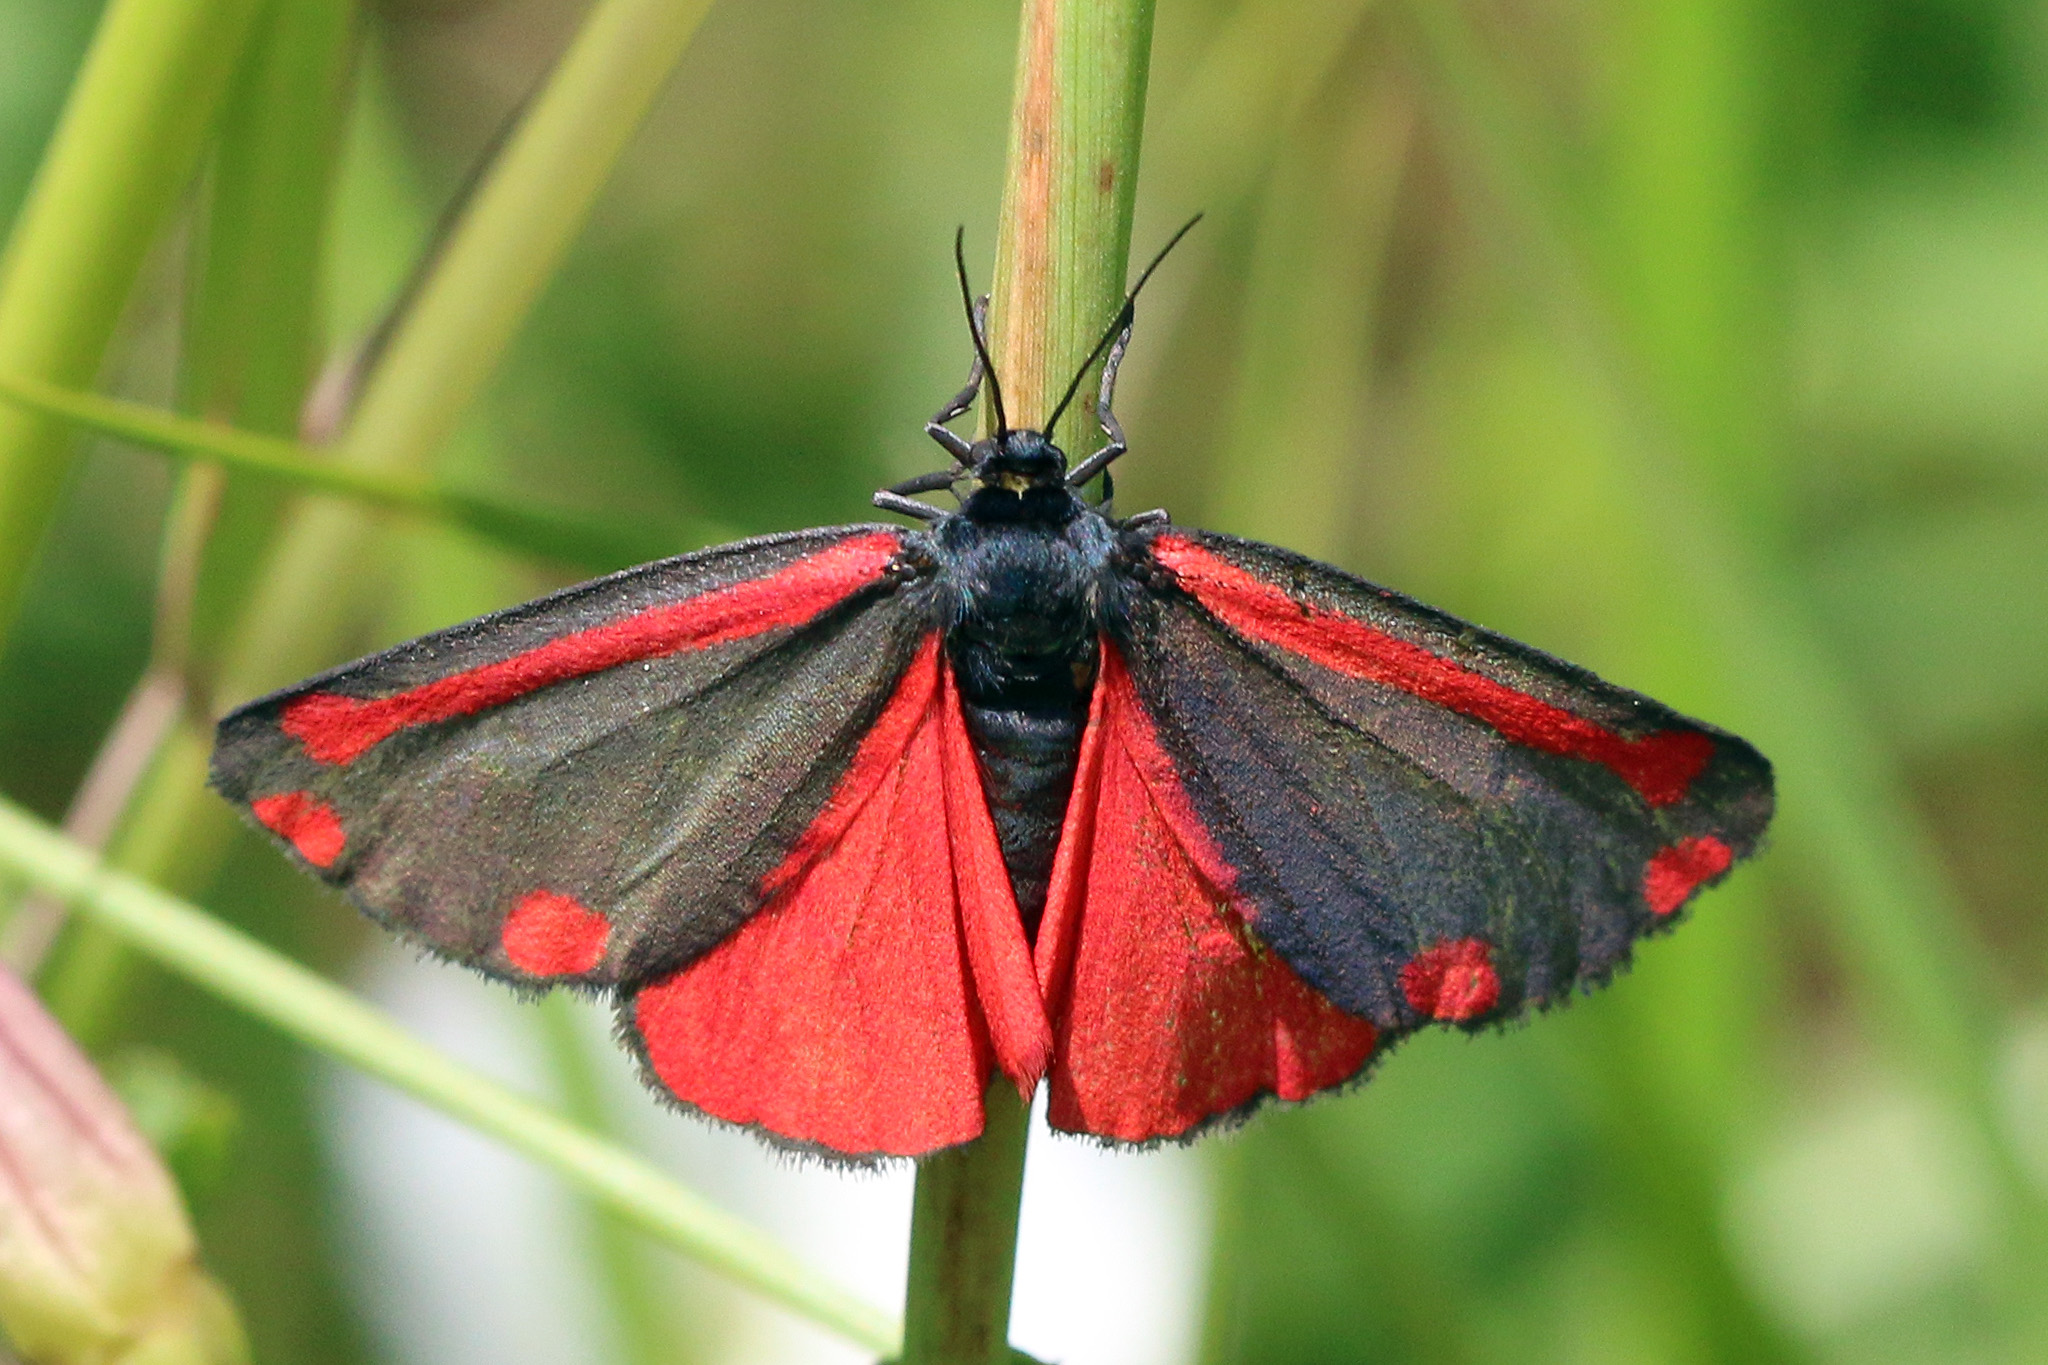 Marvellous Moths Notes On Nature Wildlife The Rspb Community